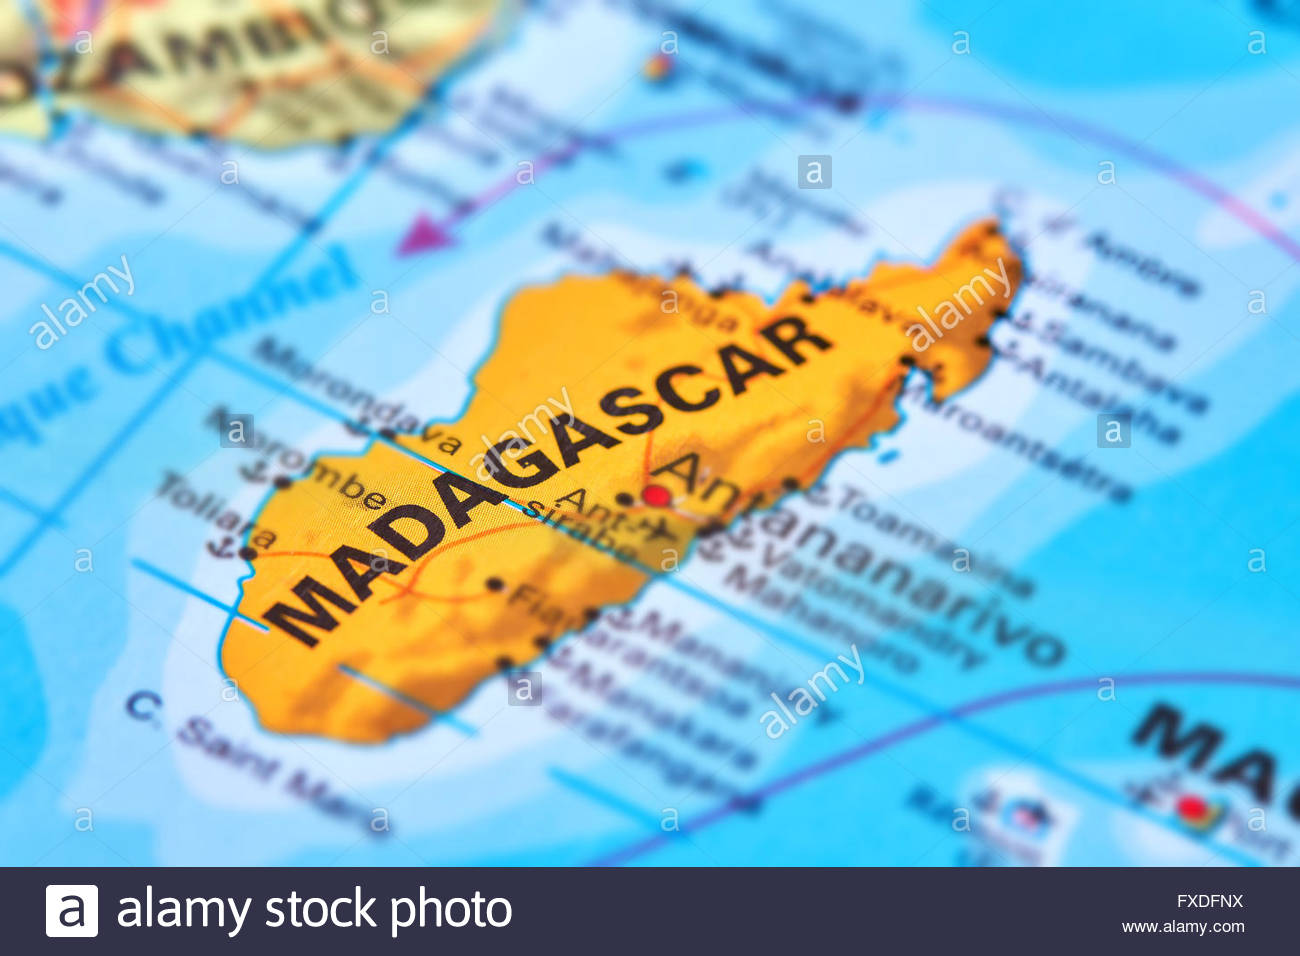 Madagascar Island Country On The World Map FXDFNX 